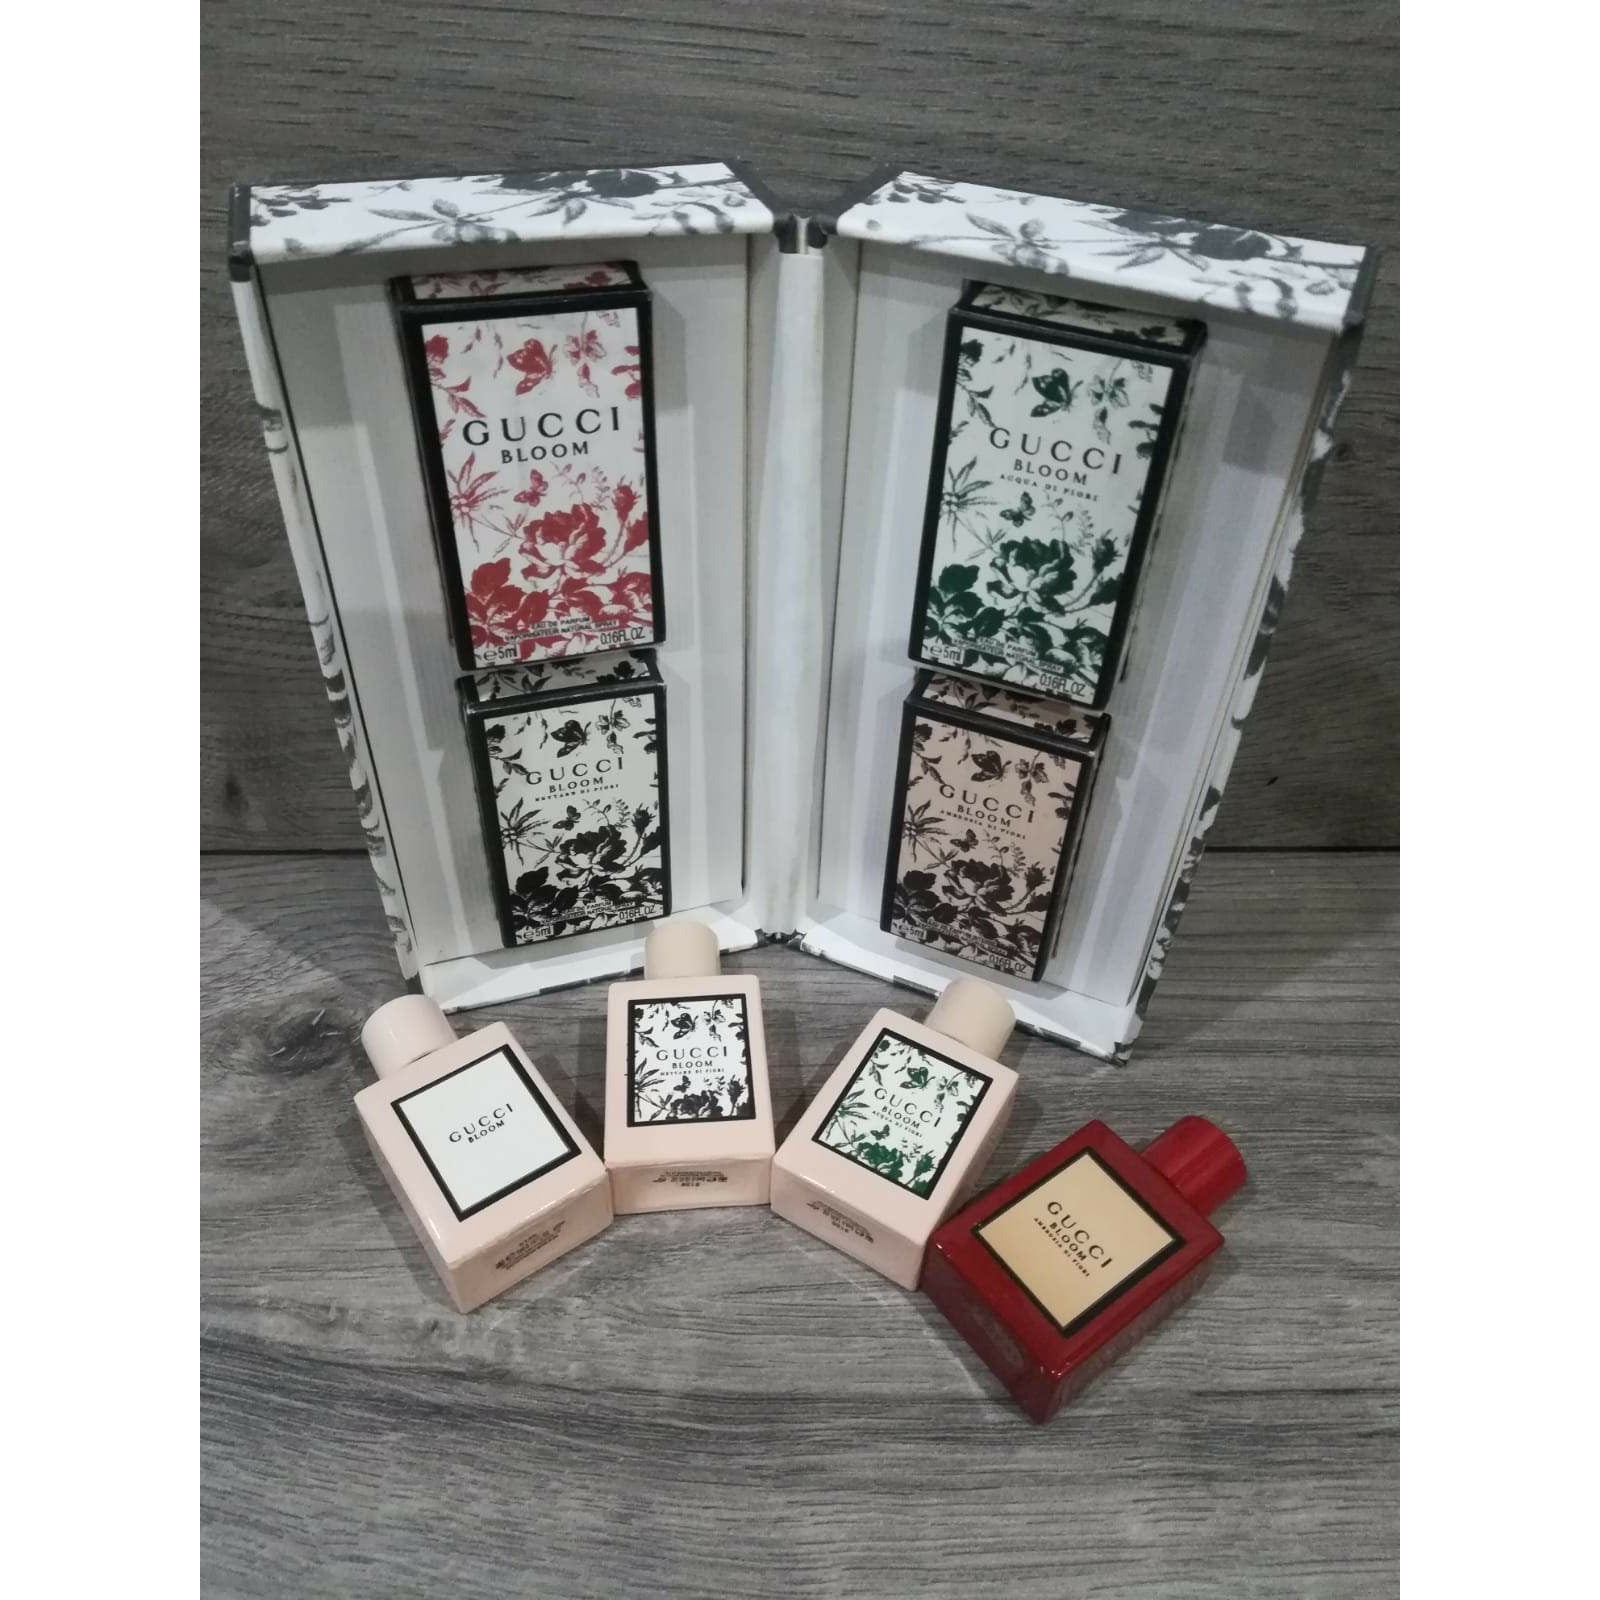 Gucci Bloom Mini Gift Set - 4 x 5ml - Fragrance Deliver SA